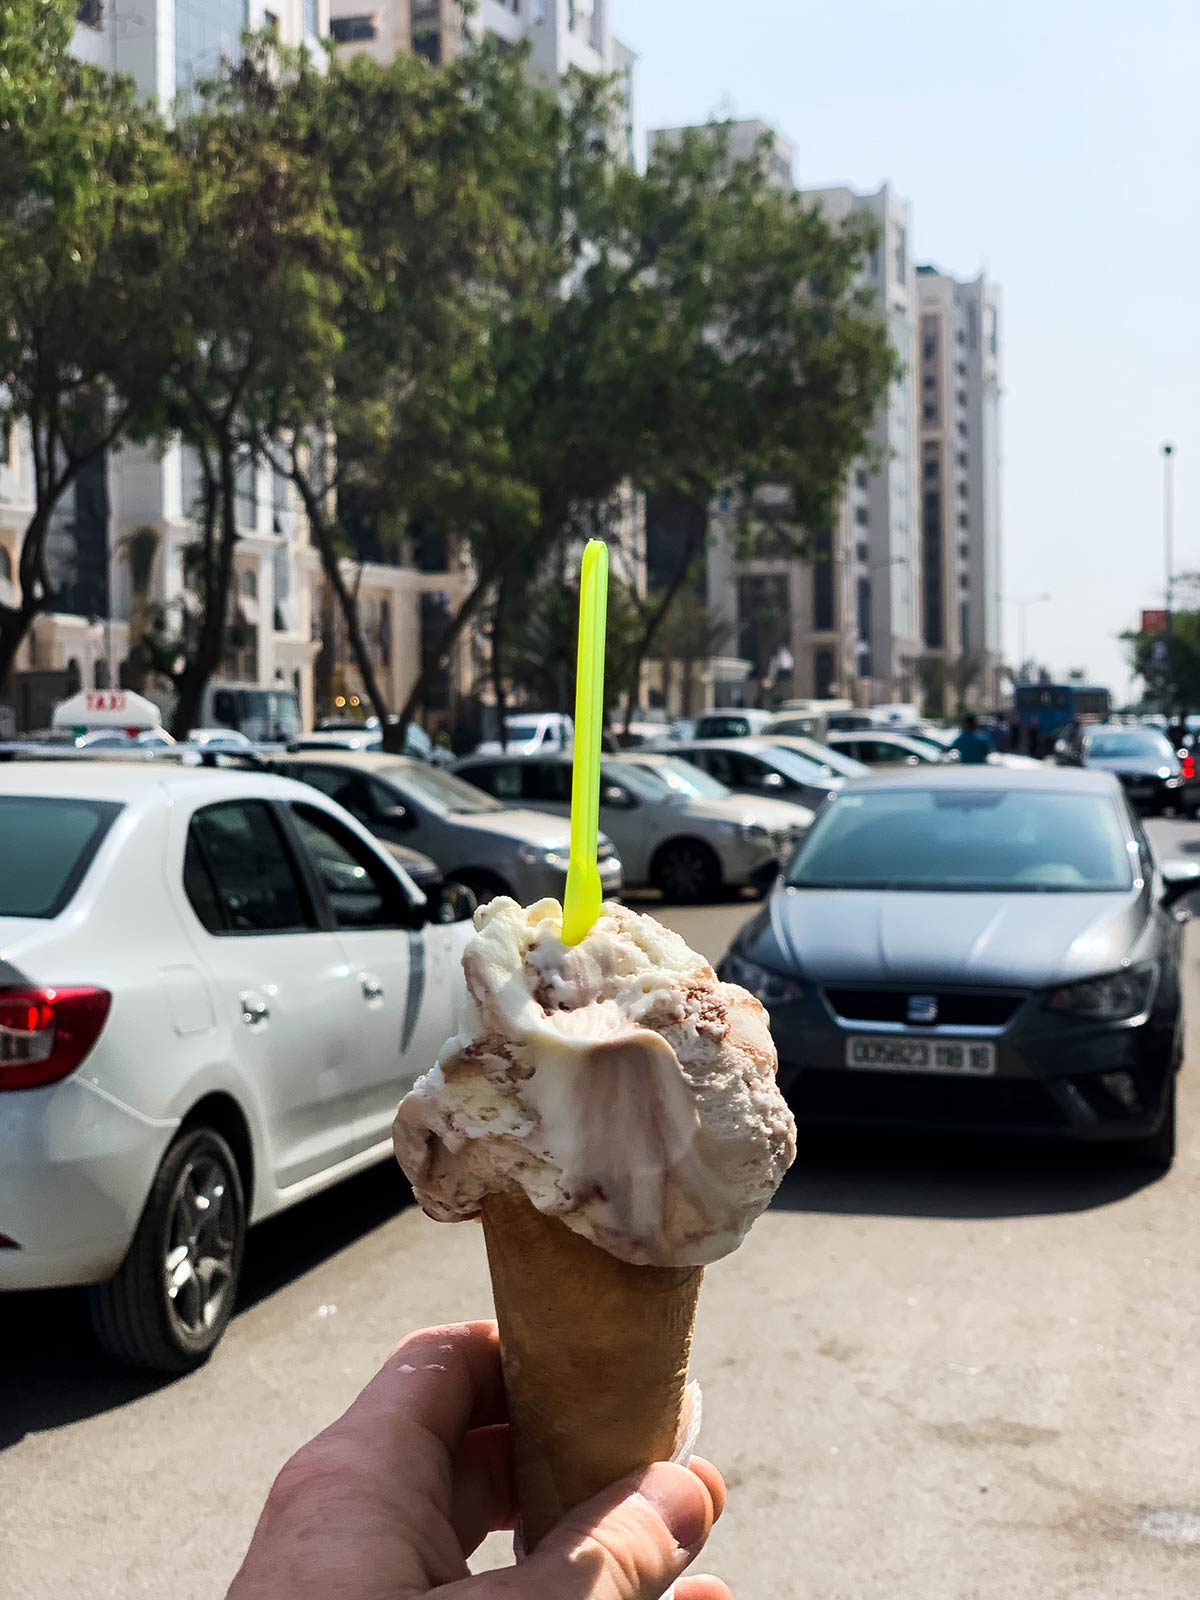 Ice cream cone in Algiers, Algeria. 5 hours in an Algerian police station